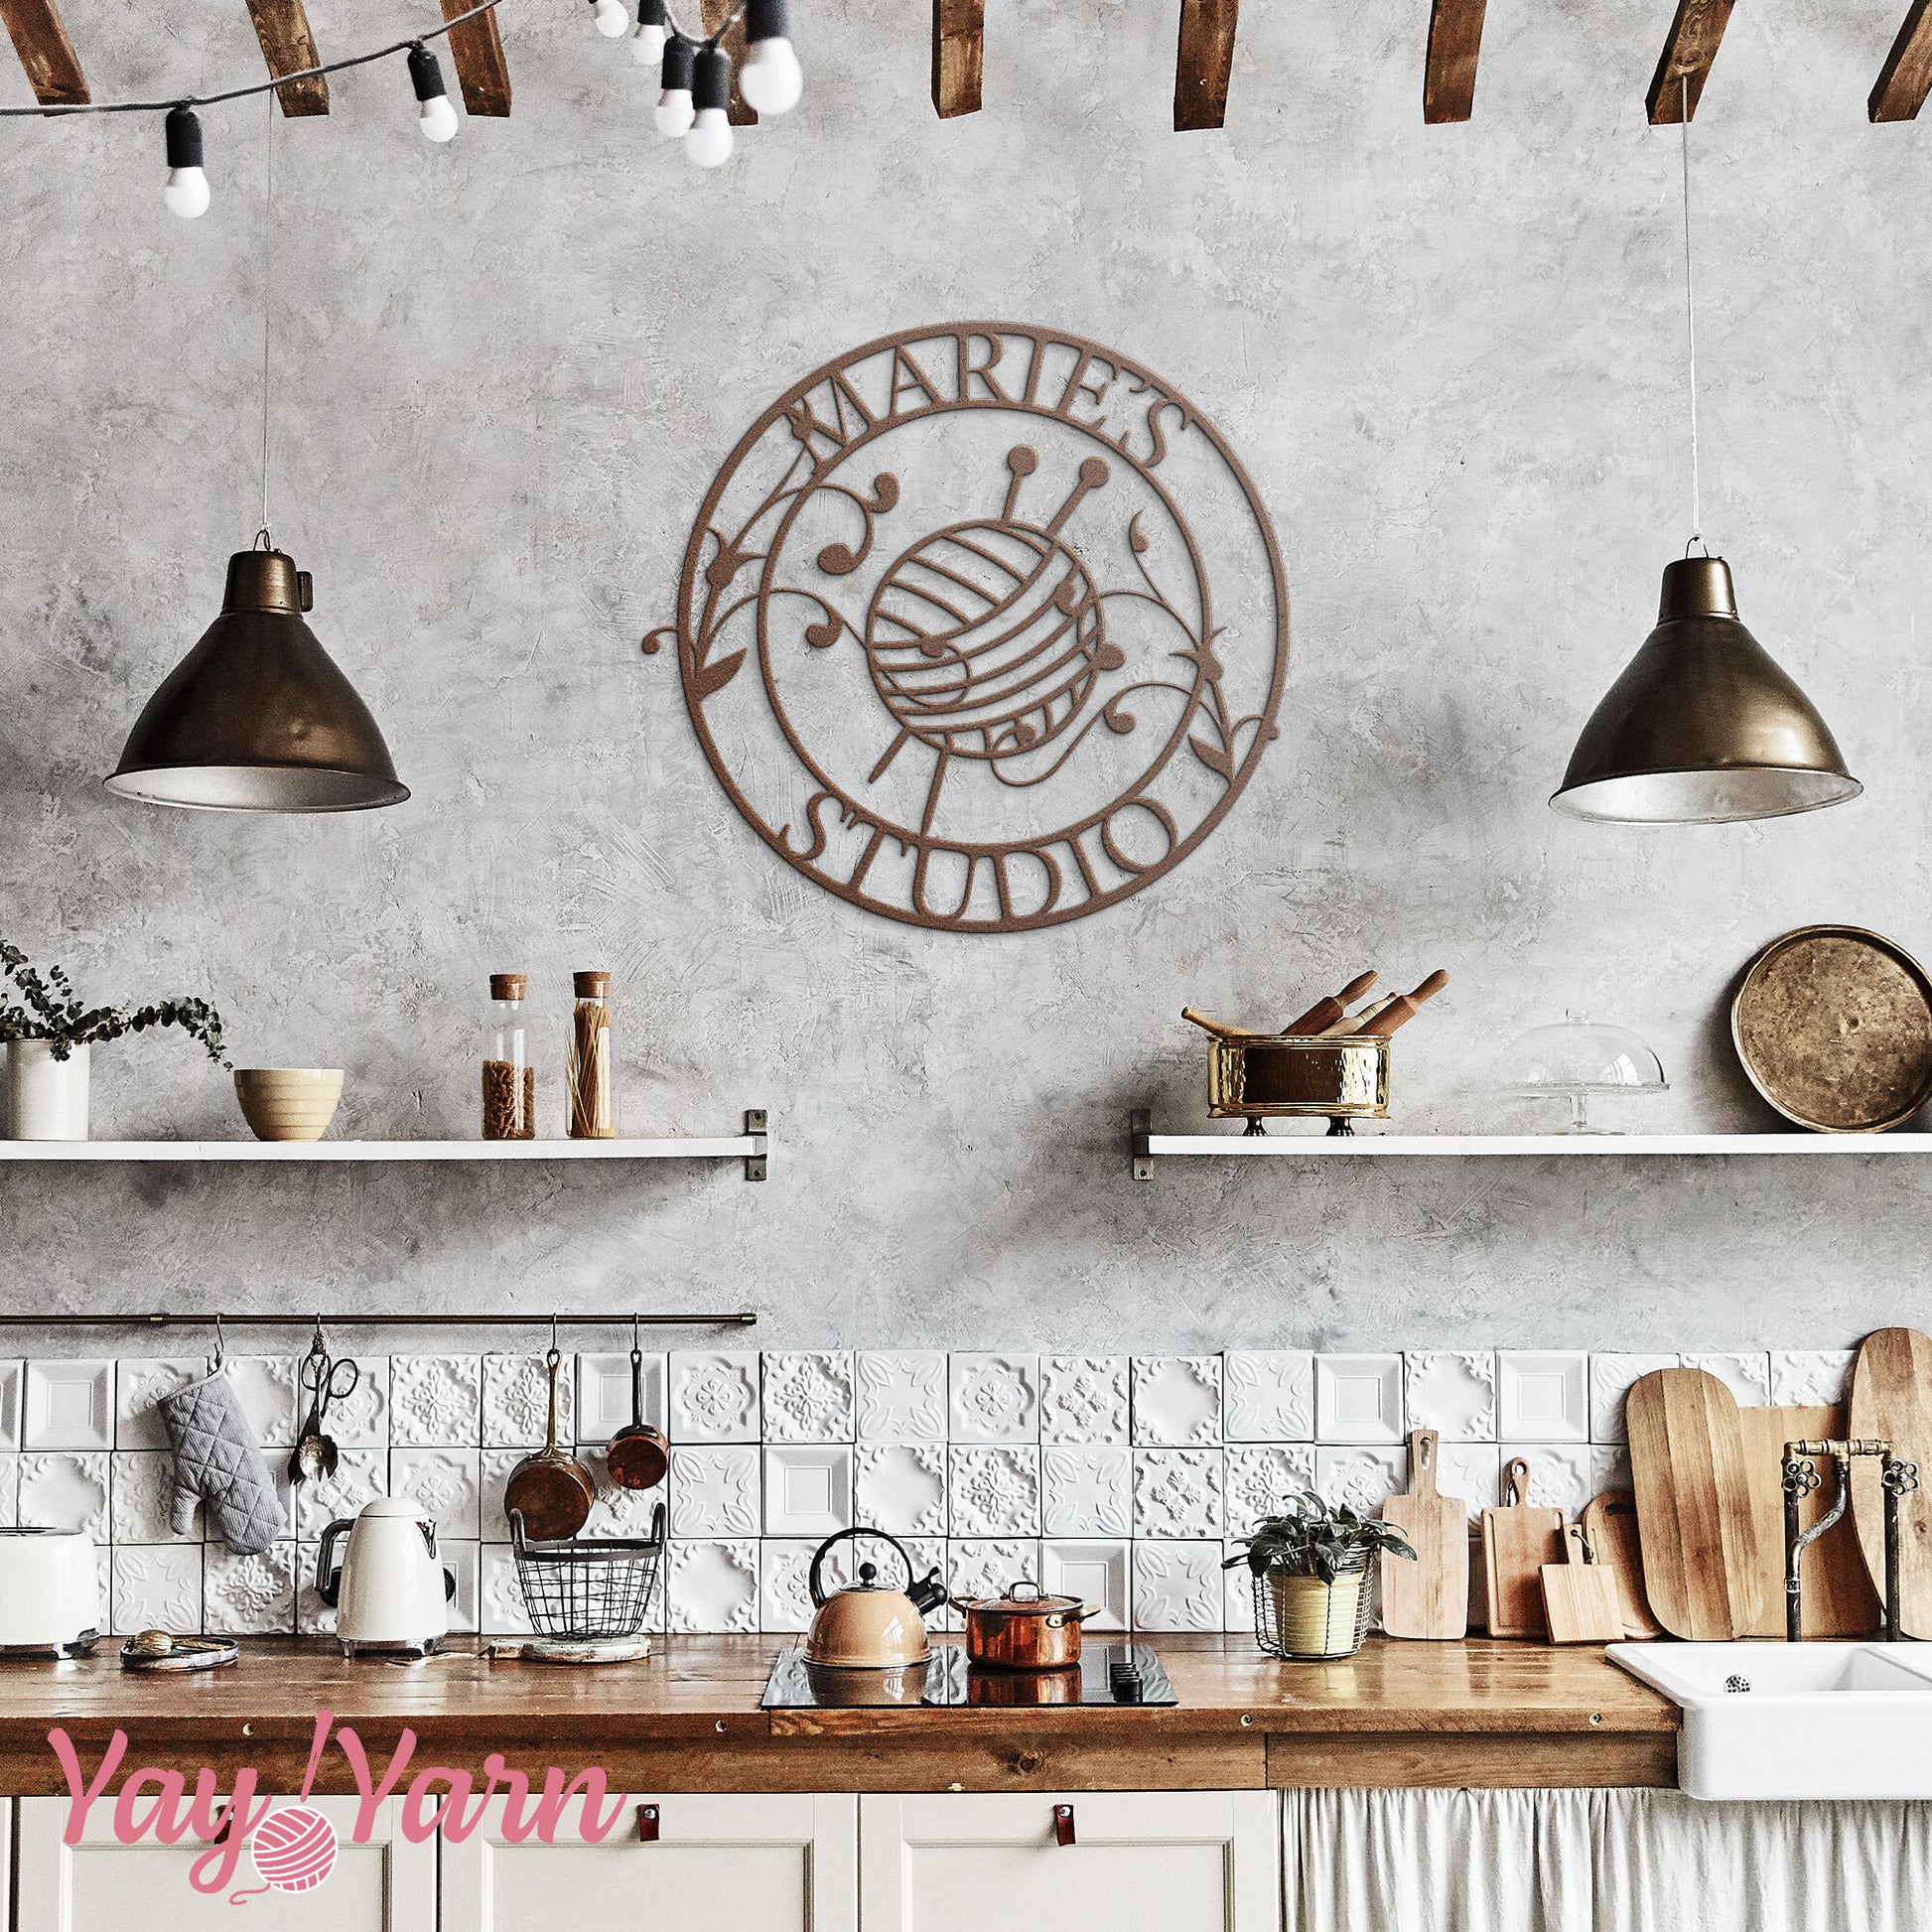 Knitting Studio Metal Wall Art Personalized Copper in Farmhouse Kitchen